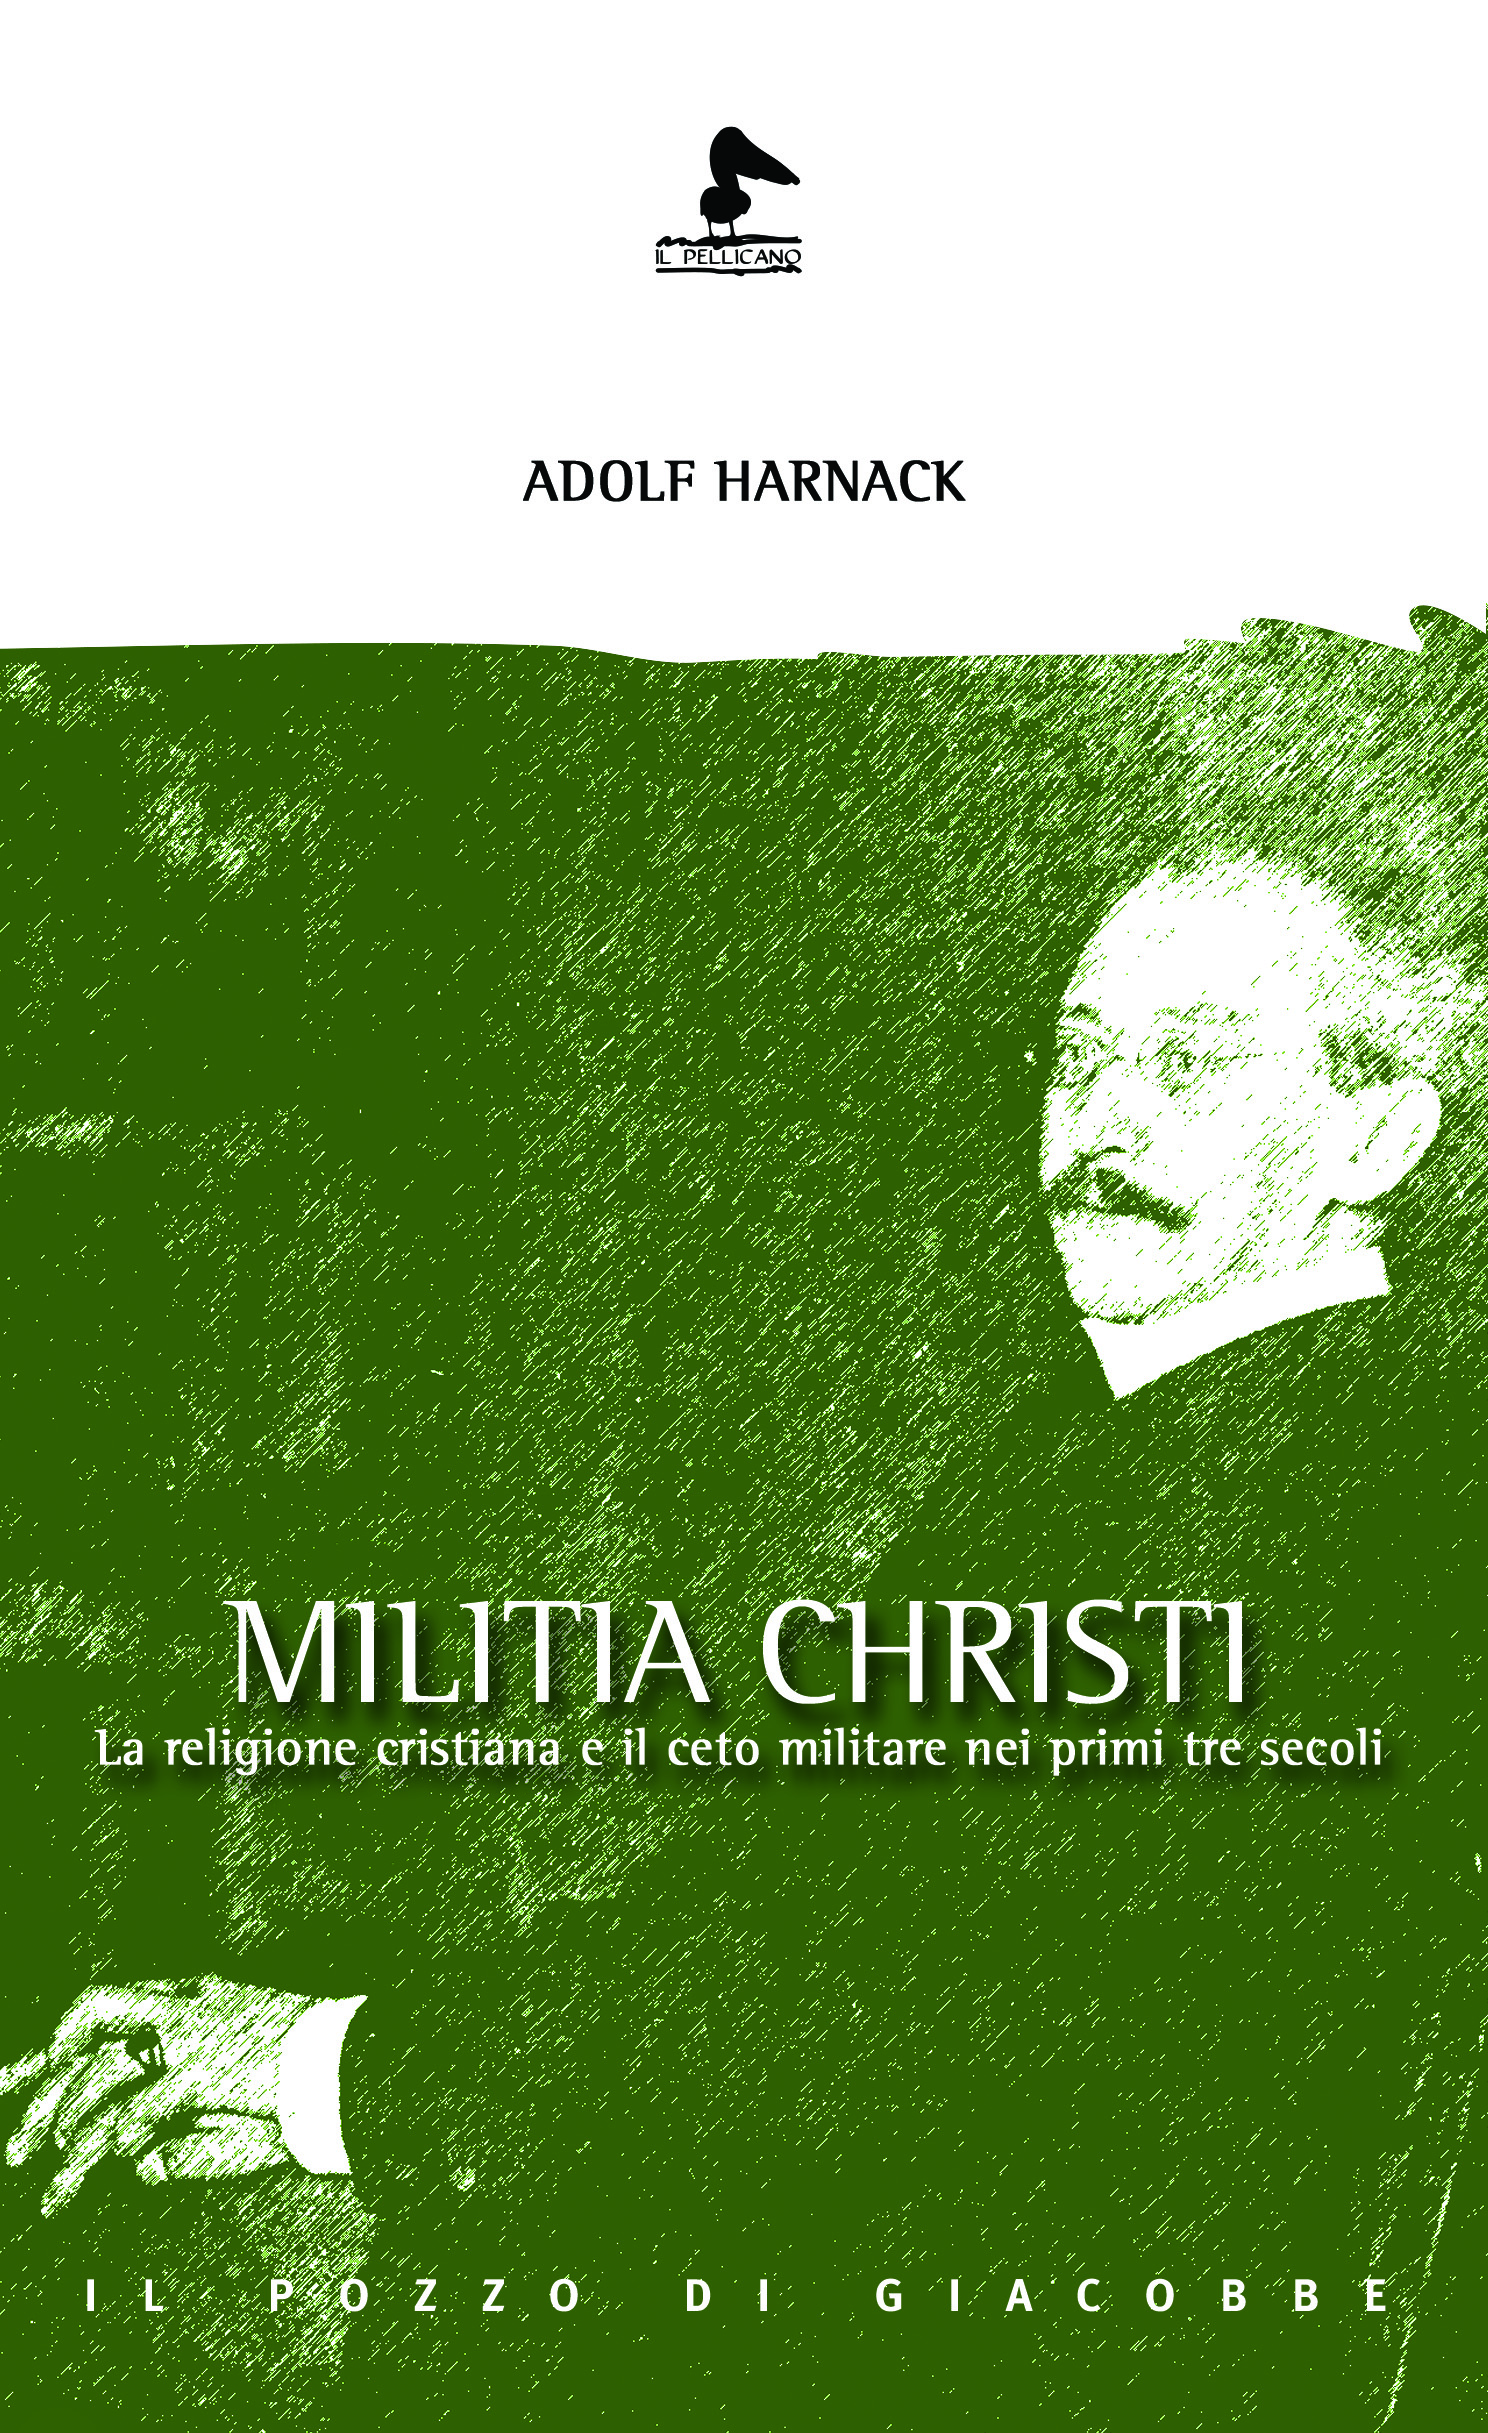 MILITIA CHRISTI.Cover (1)